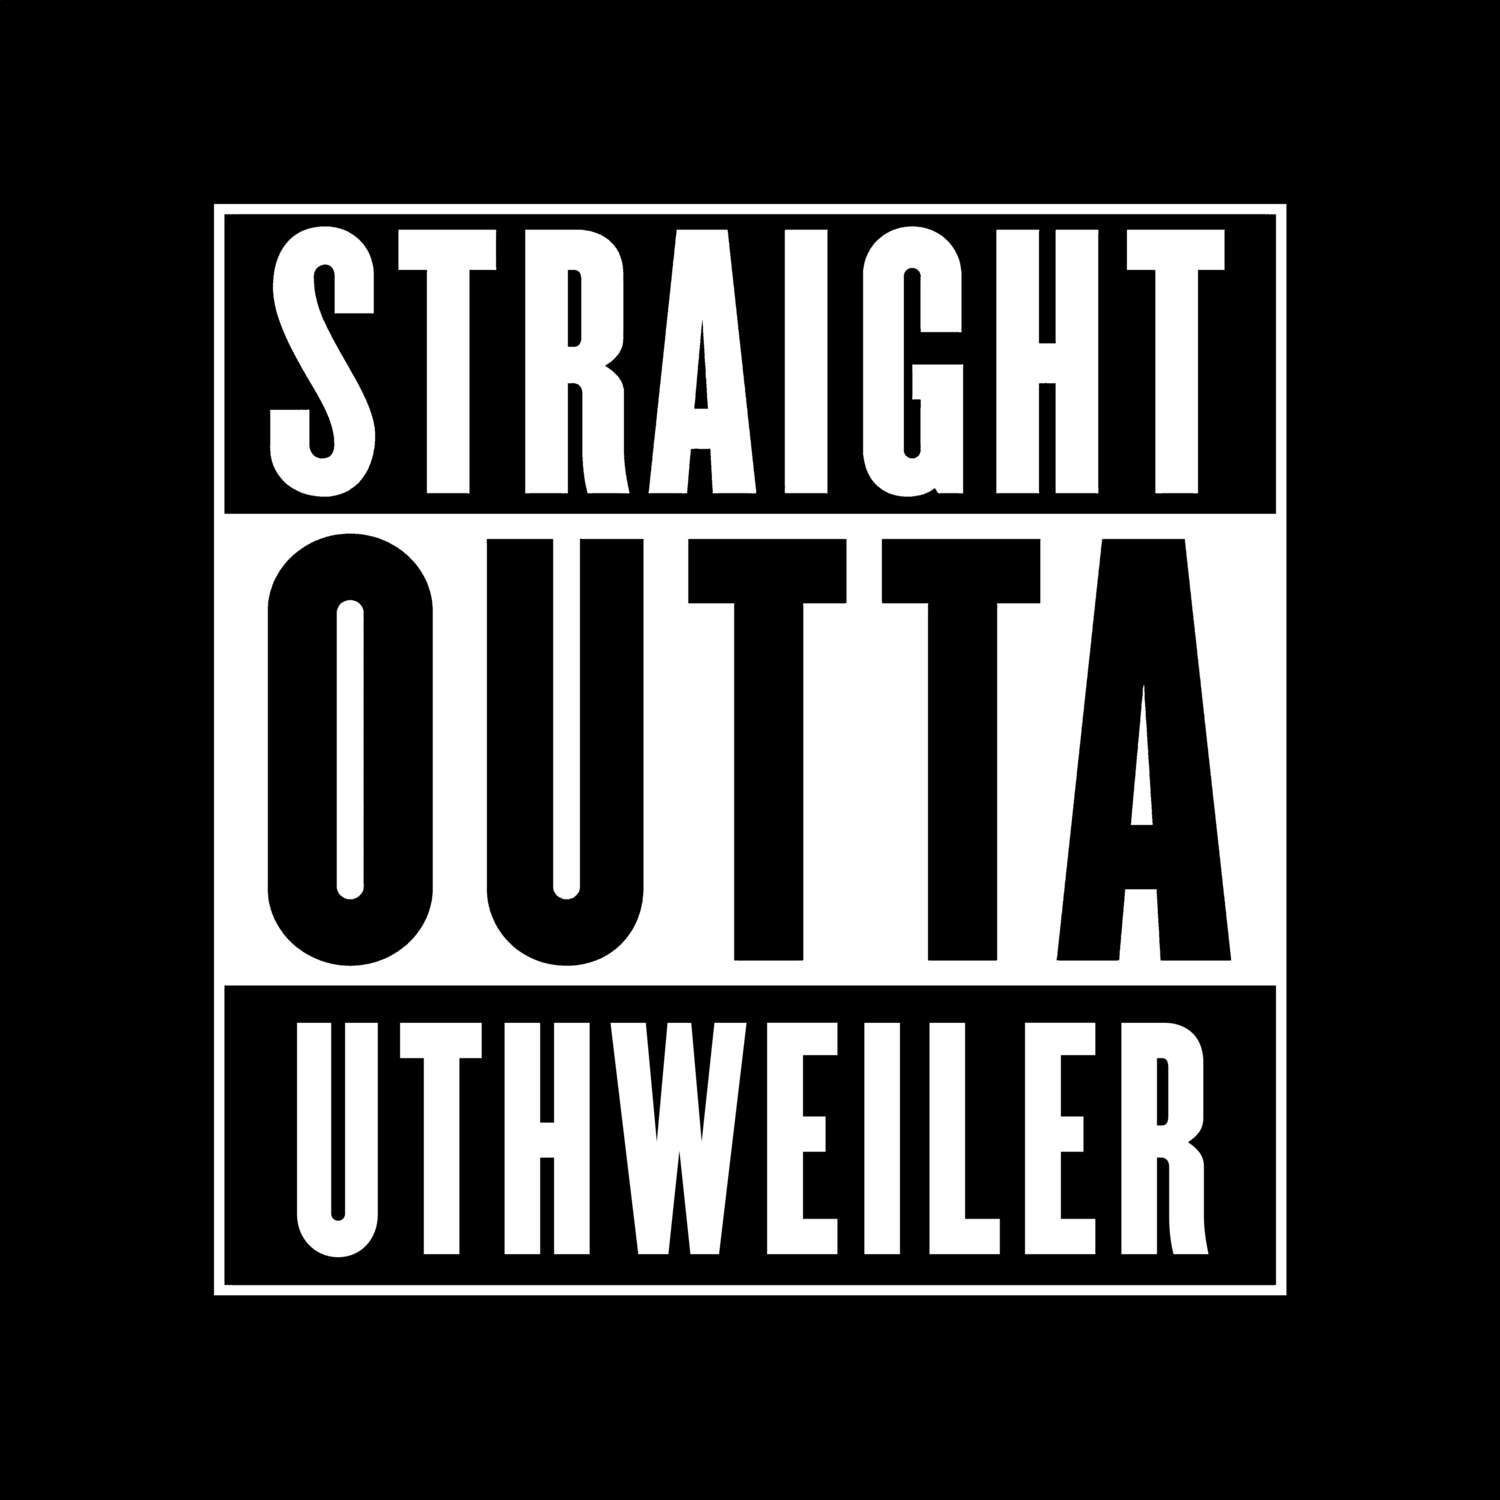 Uthweiler T-Shirt »Straight Outta«